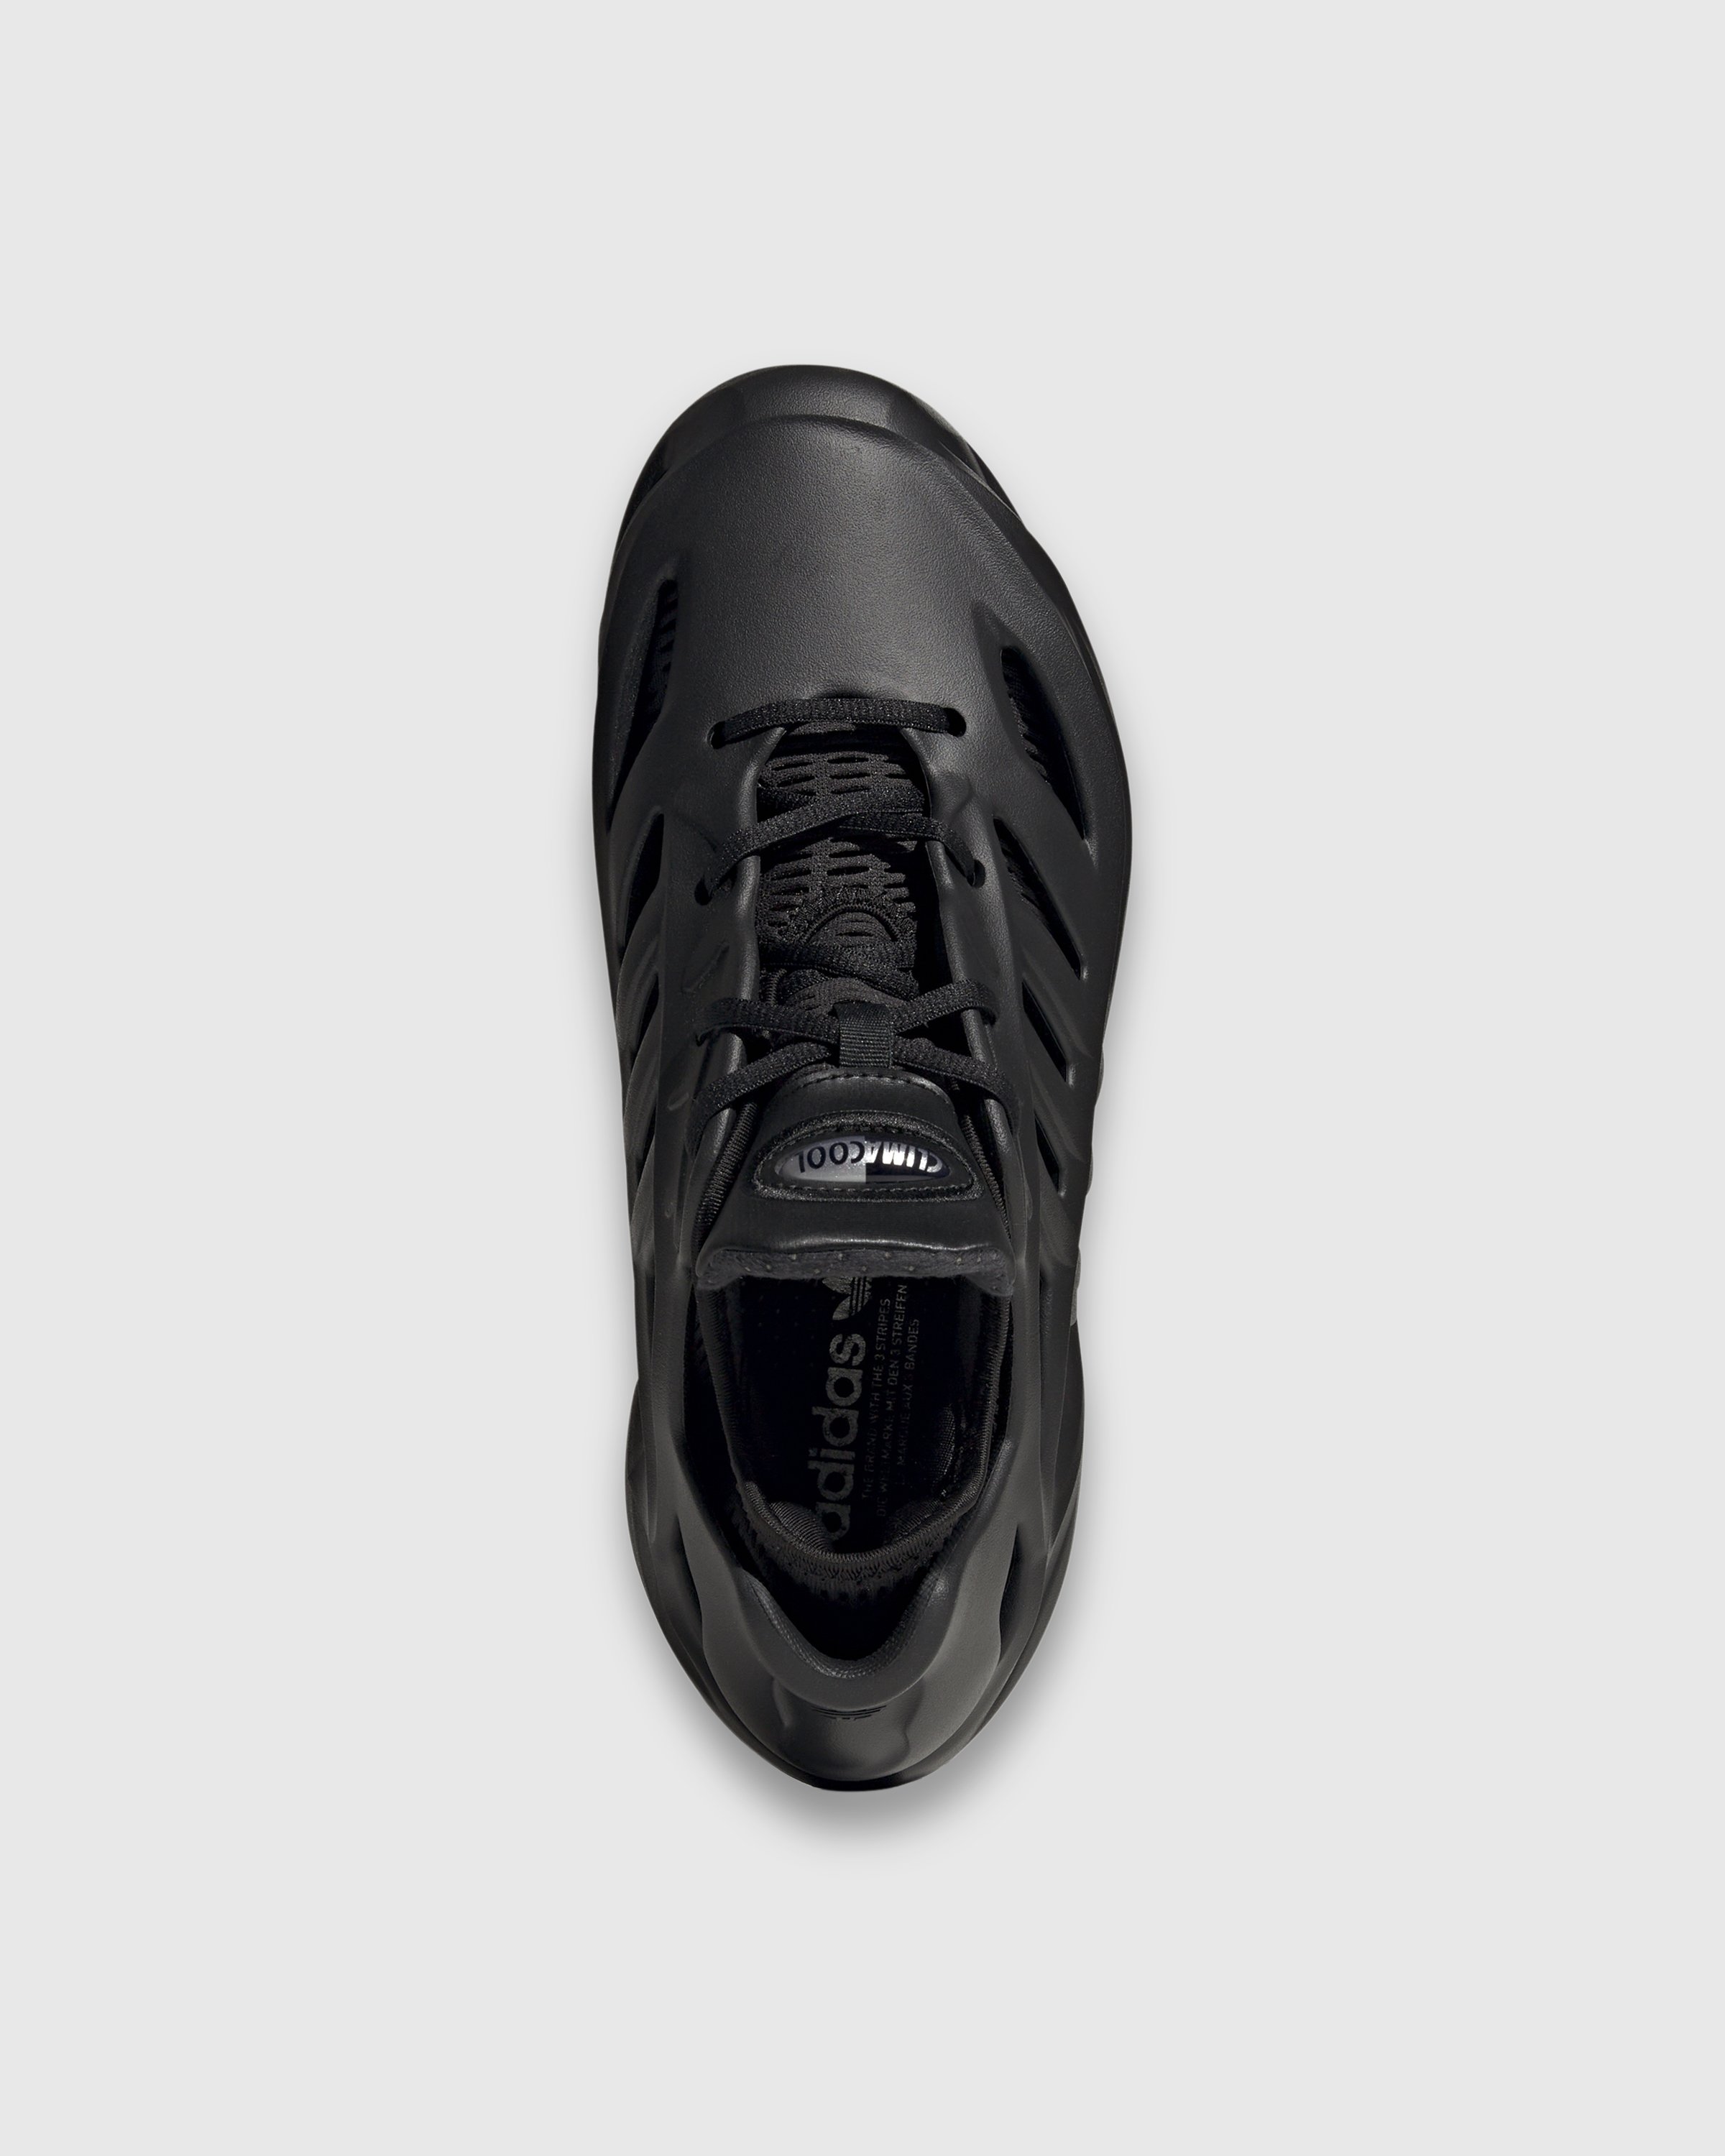 Adidas - Adifom Climacool Core Black/Silver Metallic - Footwear - Black - Image 5